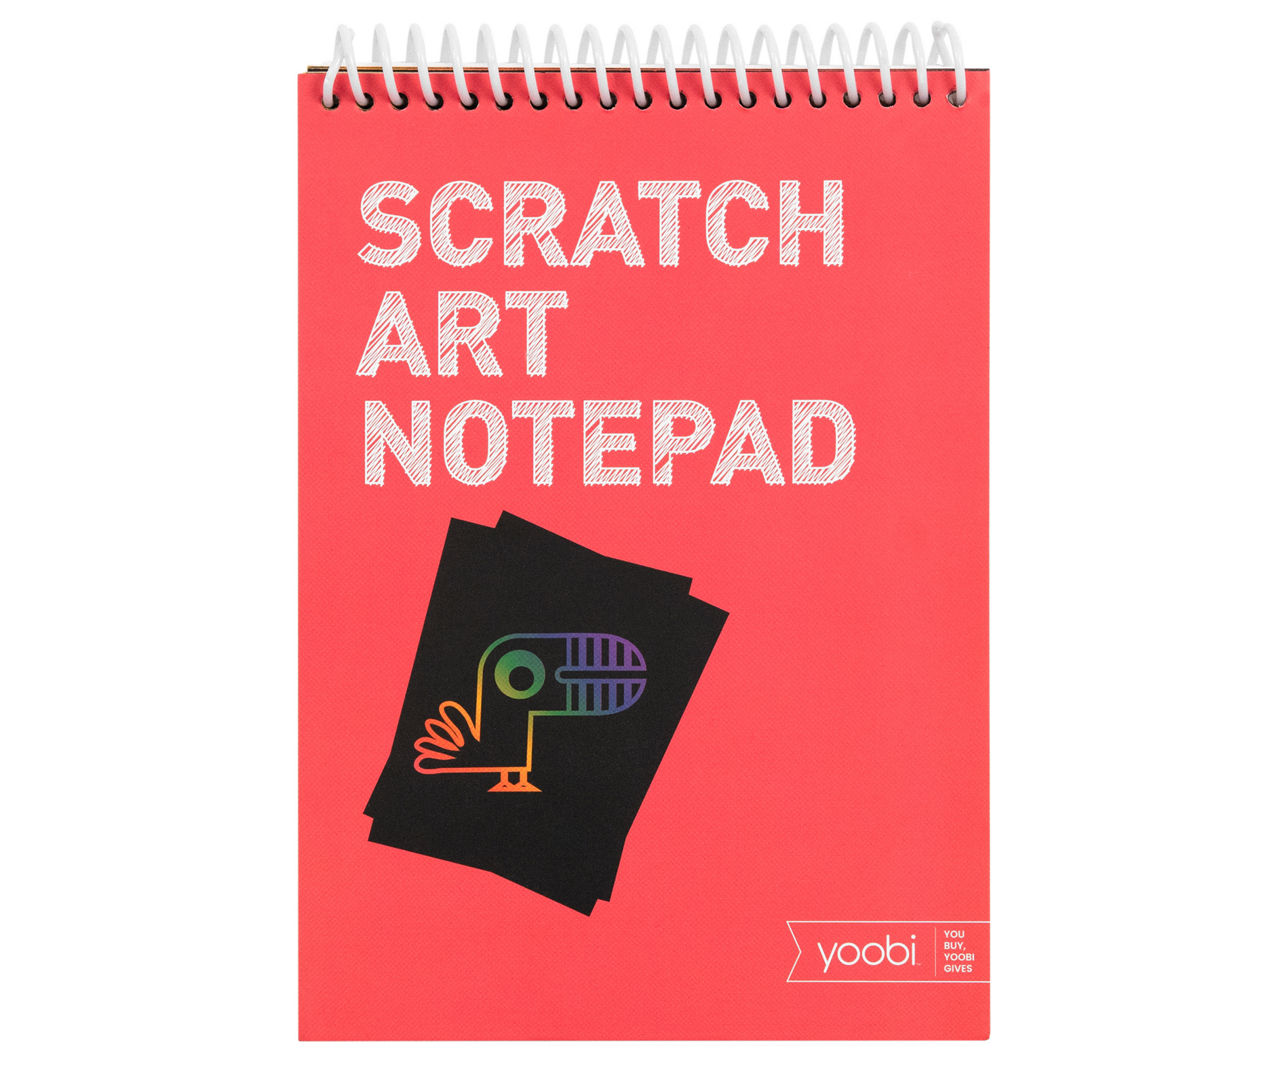  Playkidiz Scratch Paper Art Set, 200 Scratch Notes and